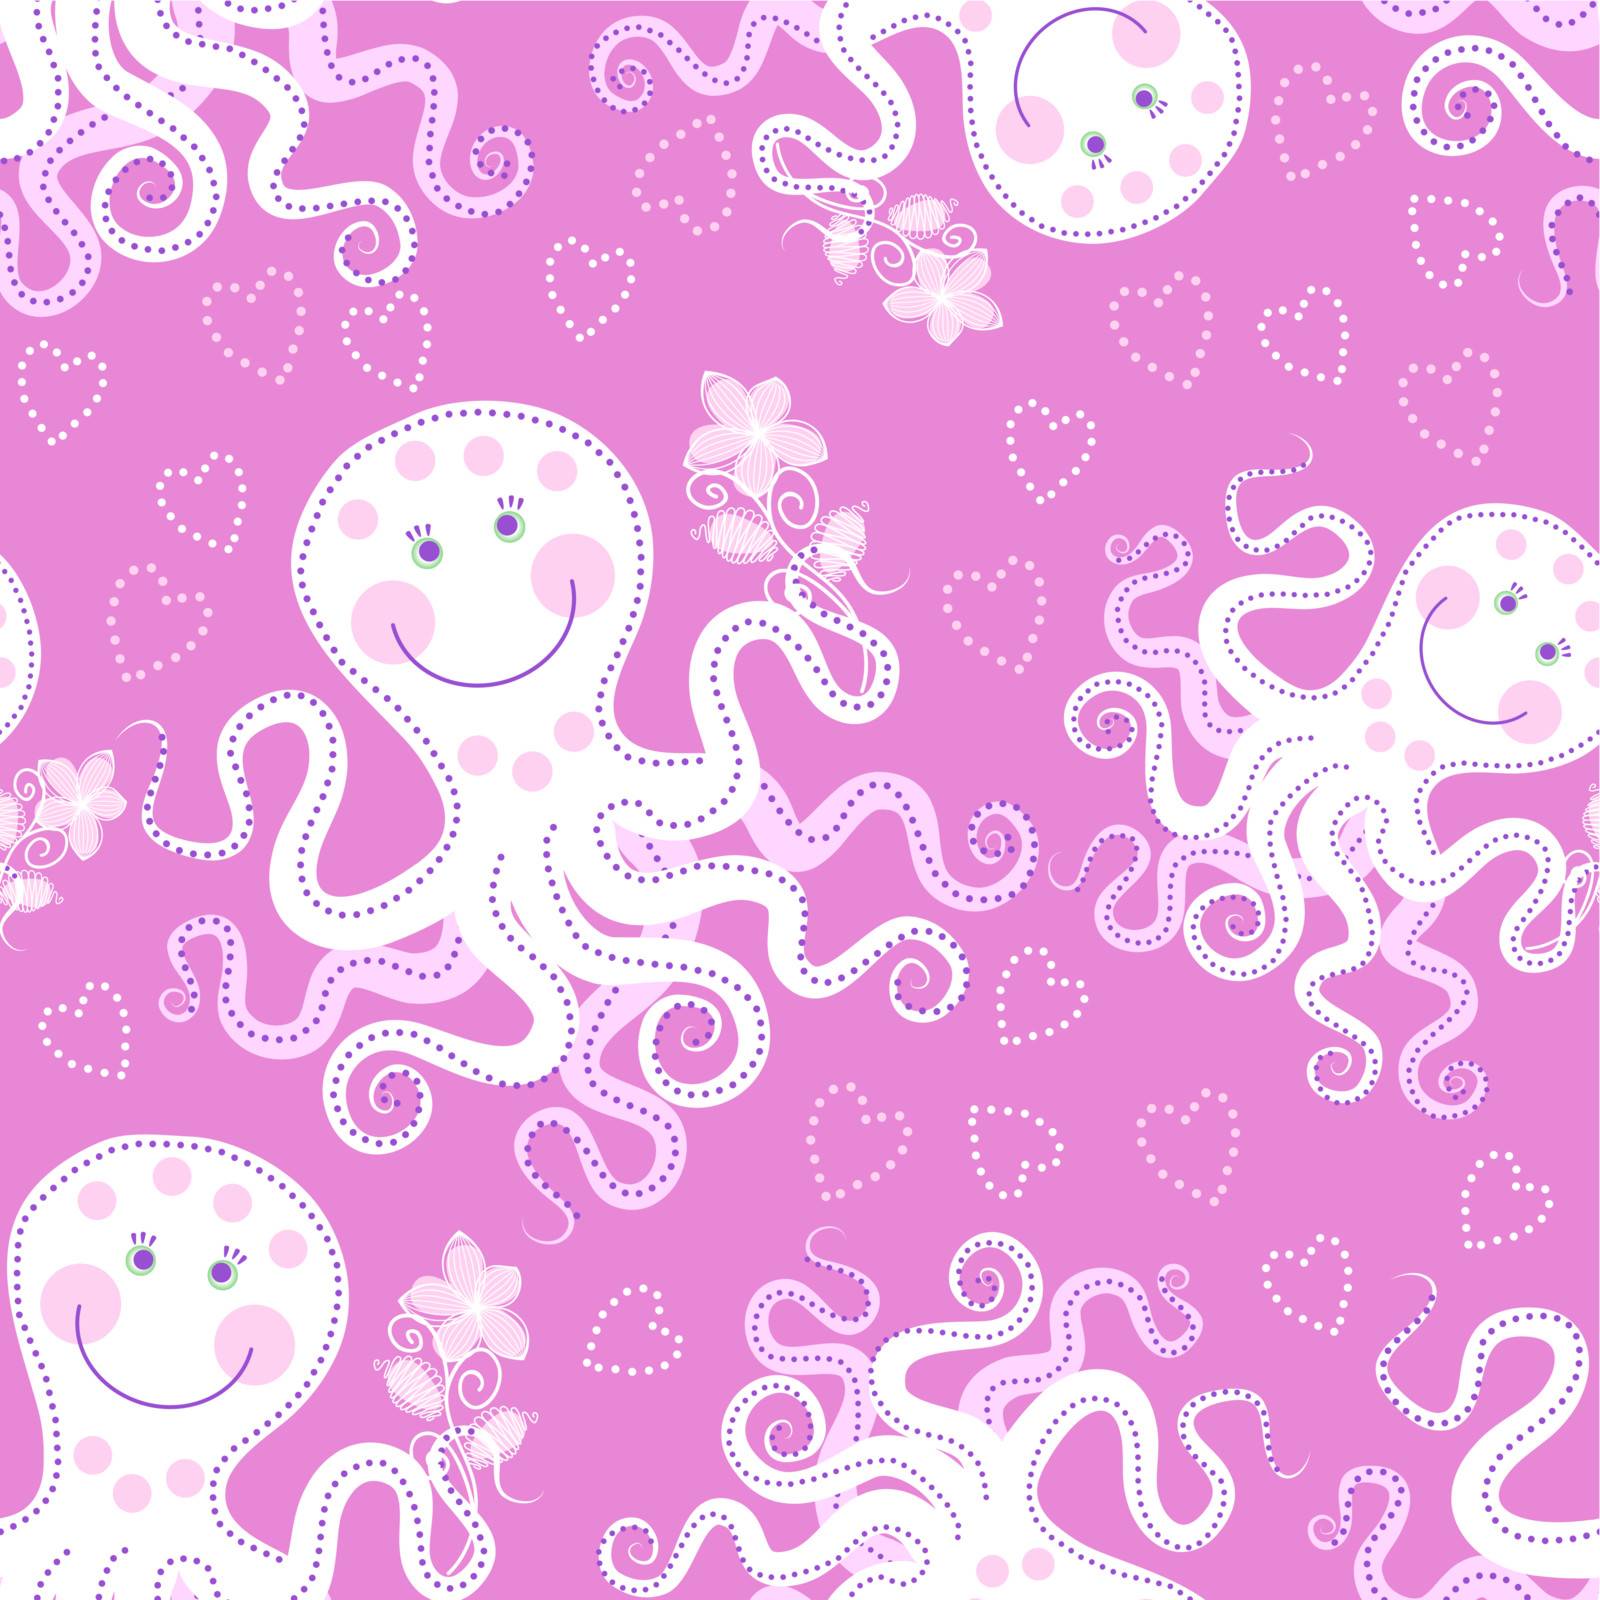 Cute octopus by Elenita